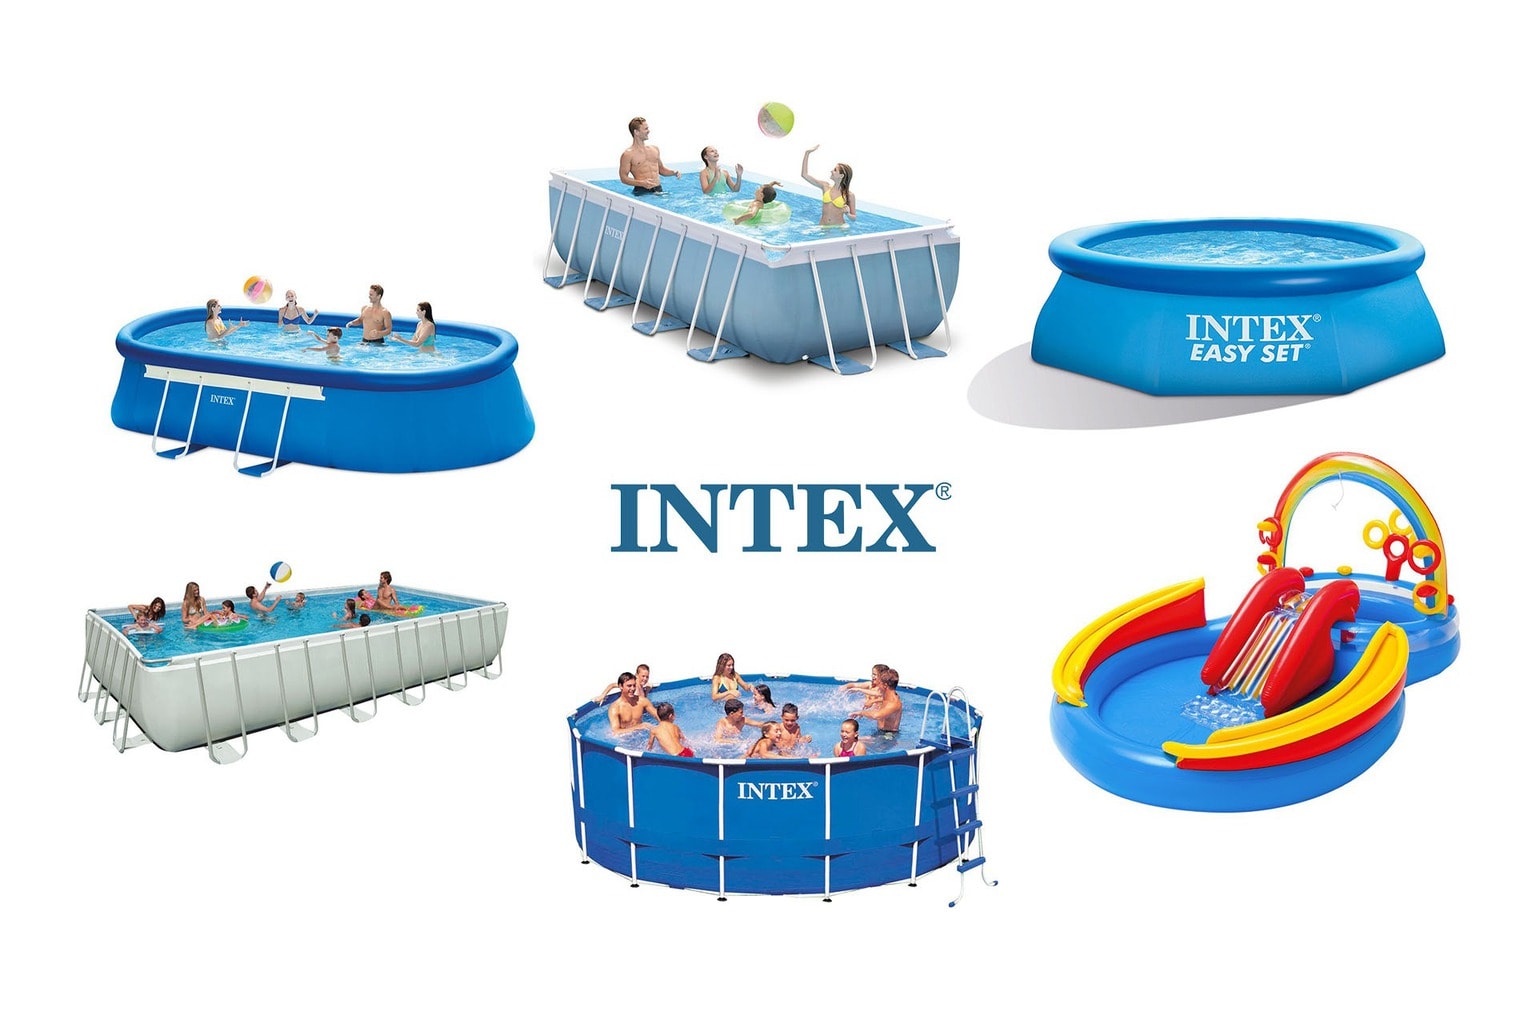 Intex easy Set logo